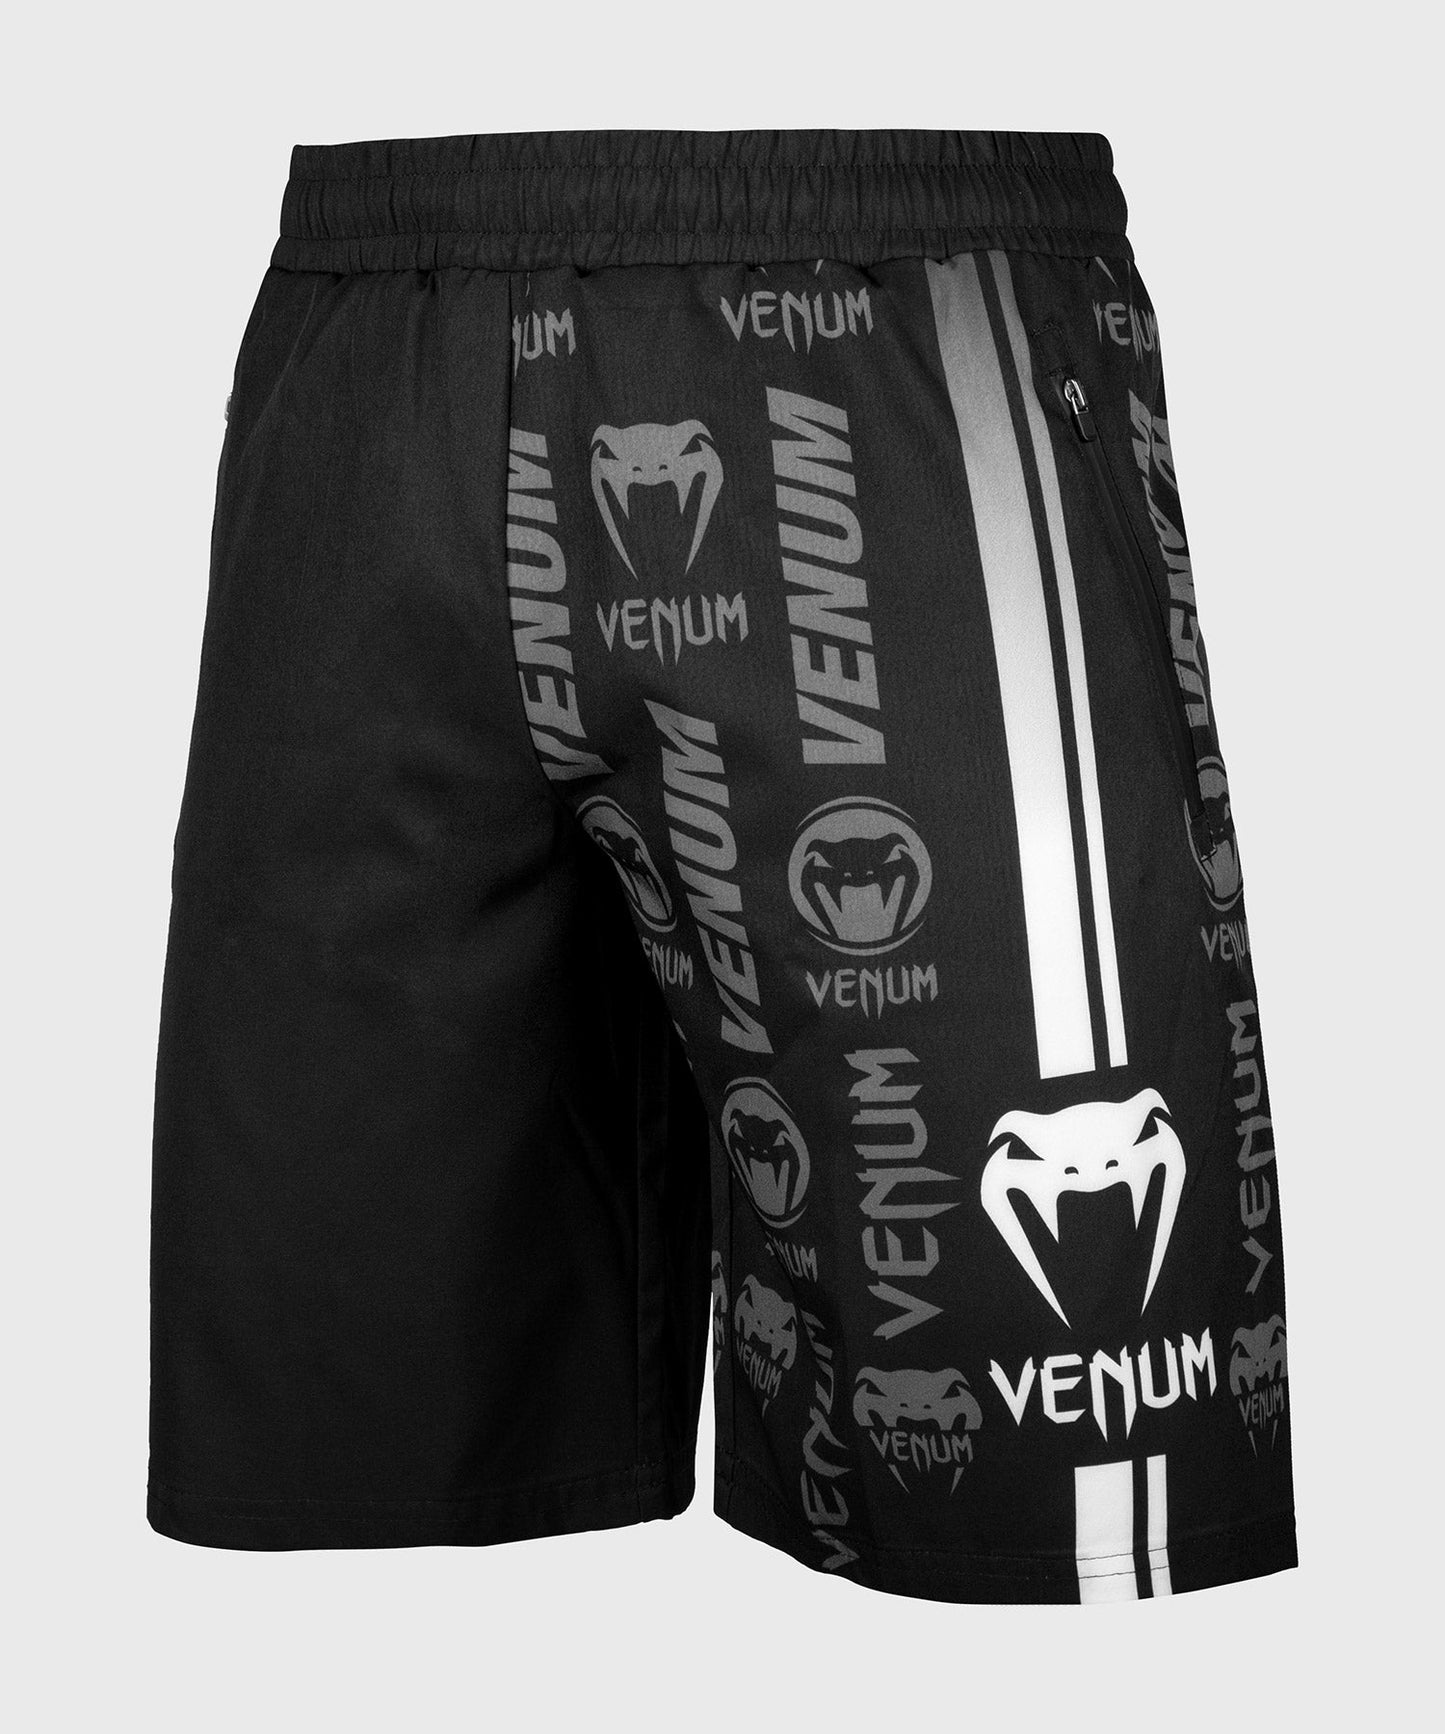 Venum Logos Training Shorts - Black/White